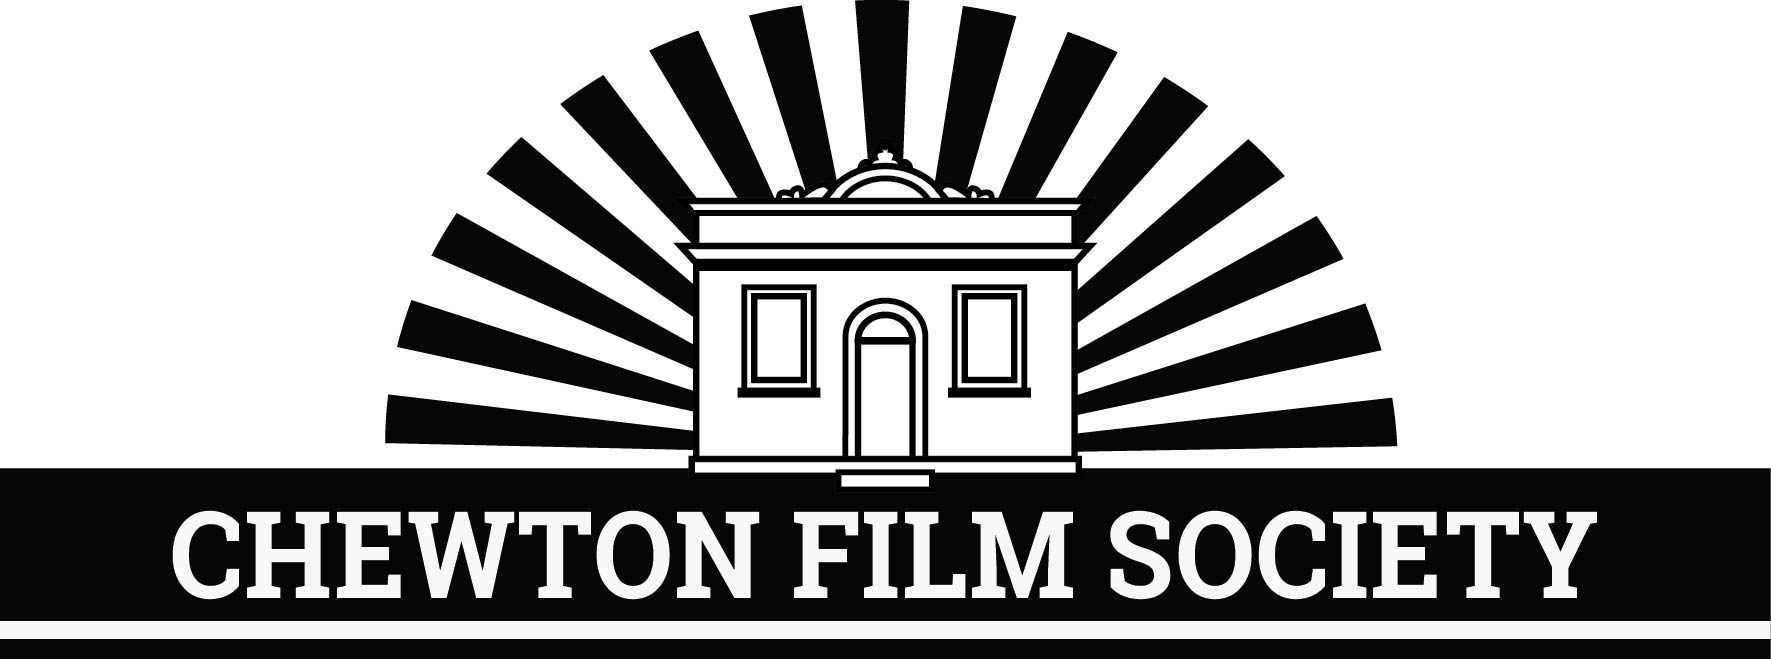 Chewton Film Society Inc.